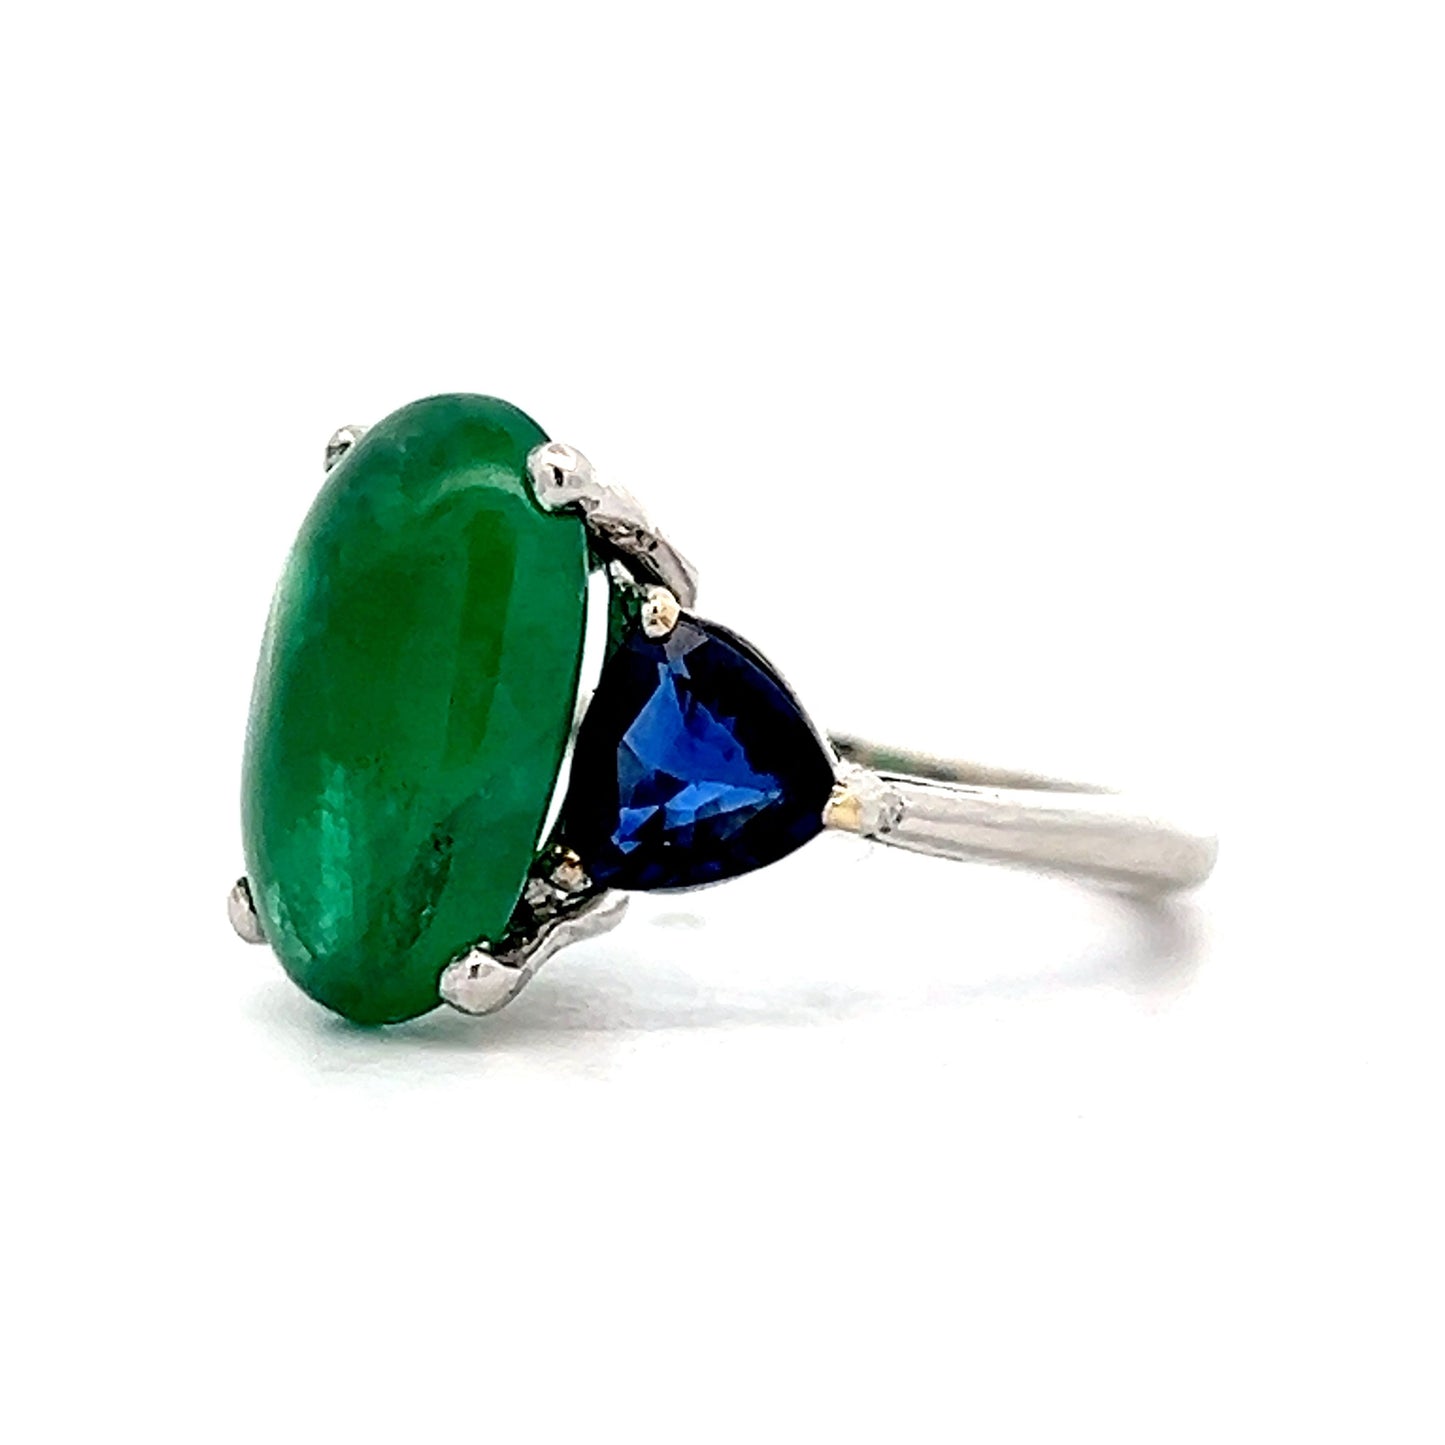 4.49 Emerald & Sapphire Cocktail Ring in Platinum